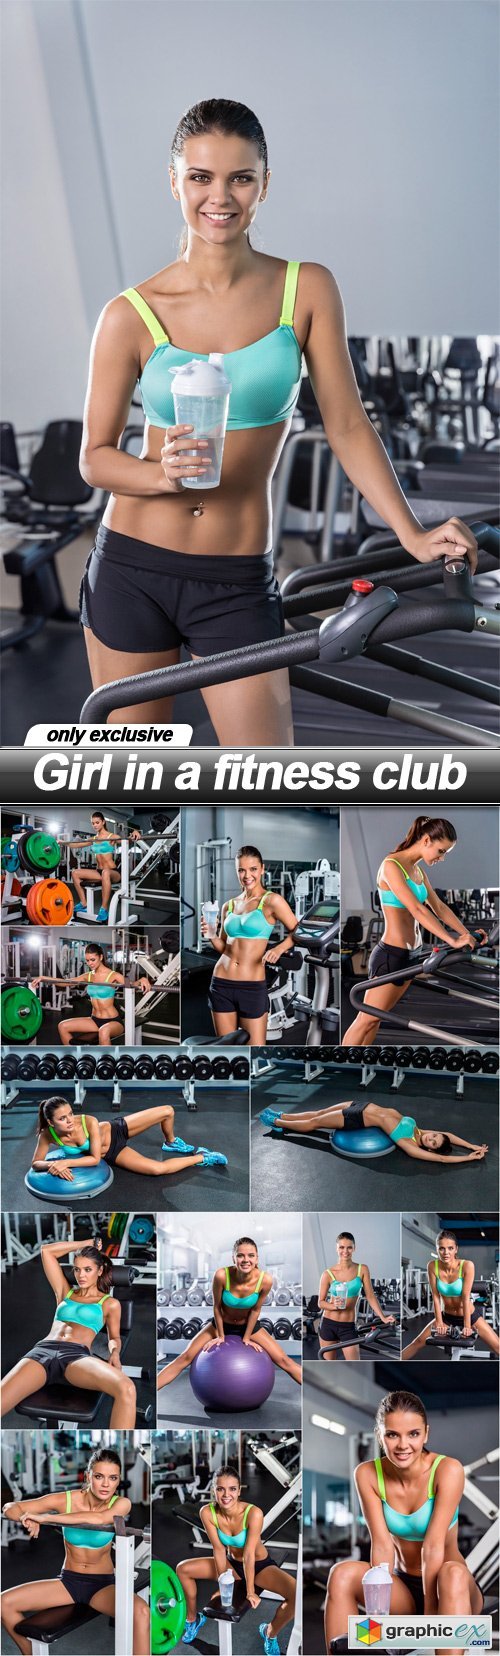 Girl in a fitness club - 13 UHQ JPEG